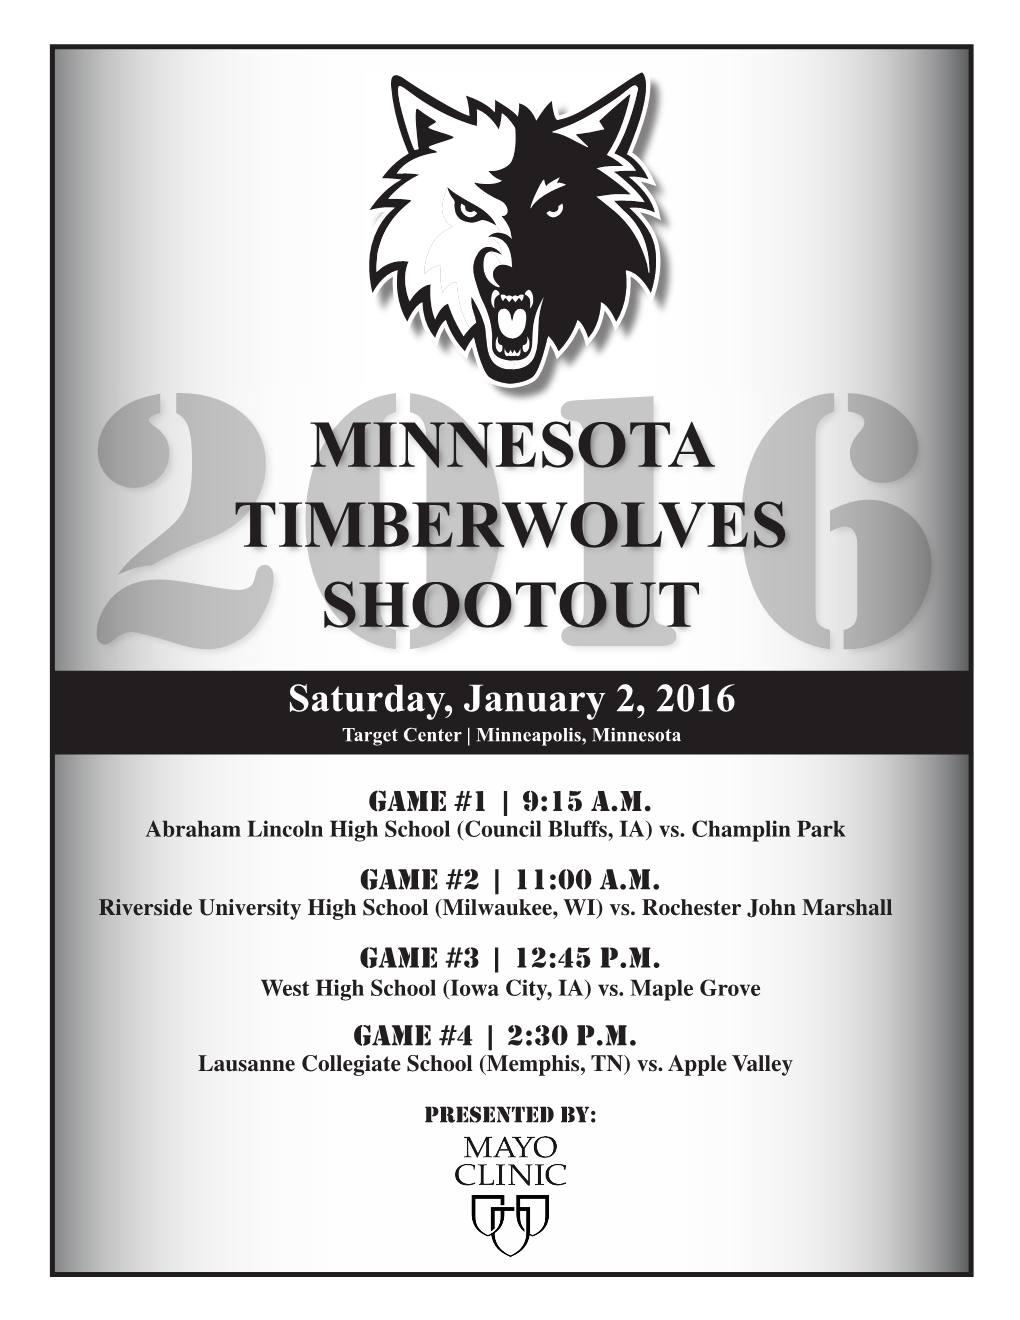 MINNESOTA TIMBERWOLVES SHOOTOUT Saturday, January 2, 2016 2016Target Center | Minneapolis, Minnesota